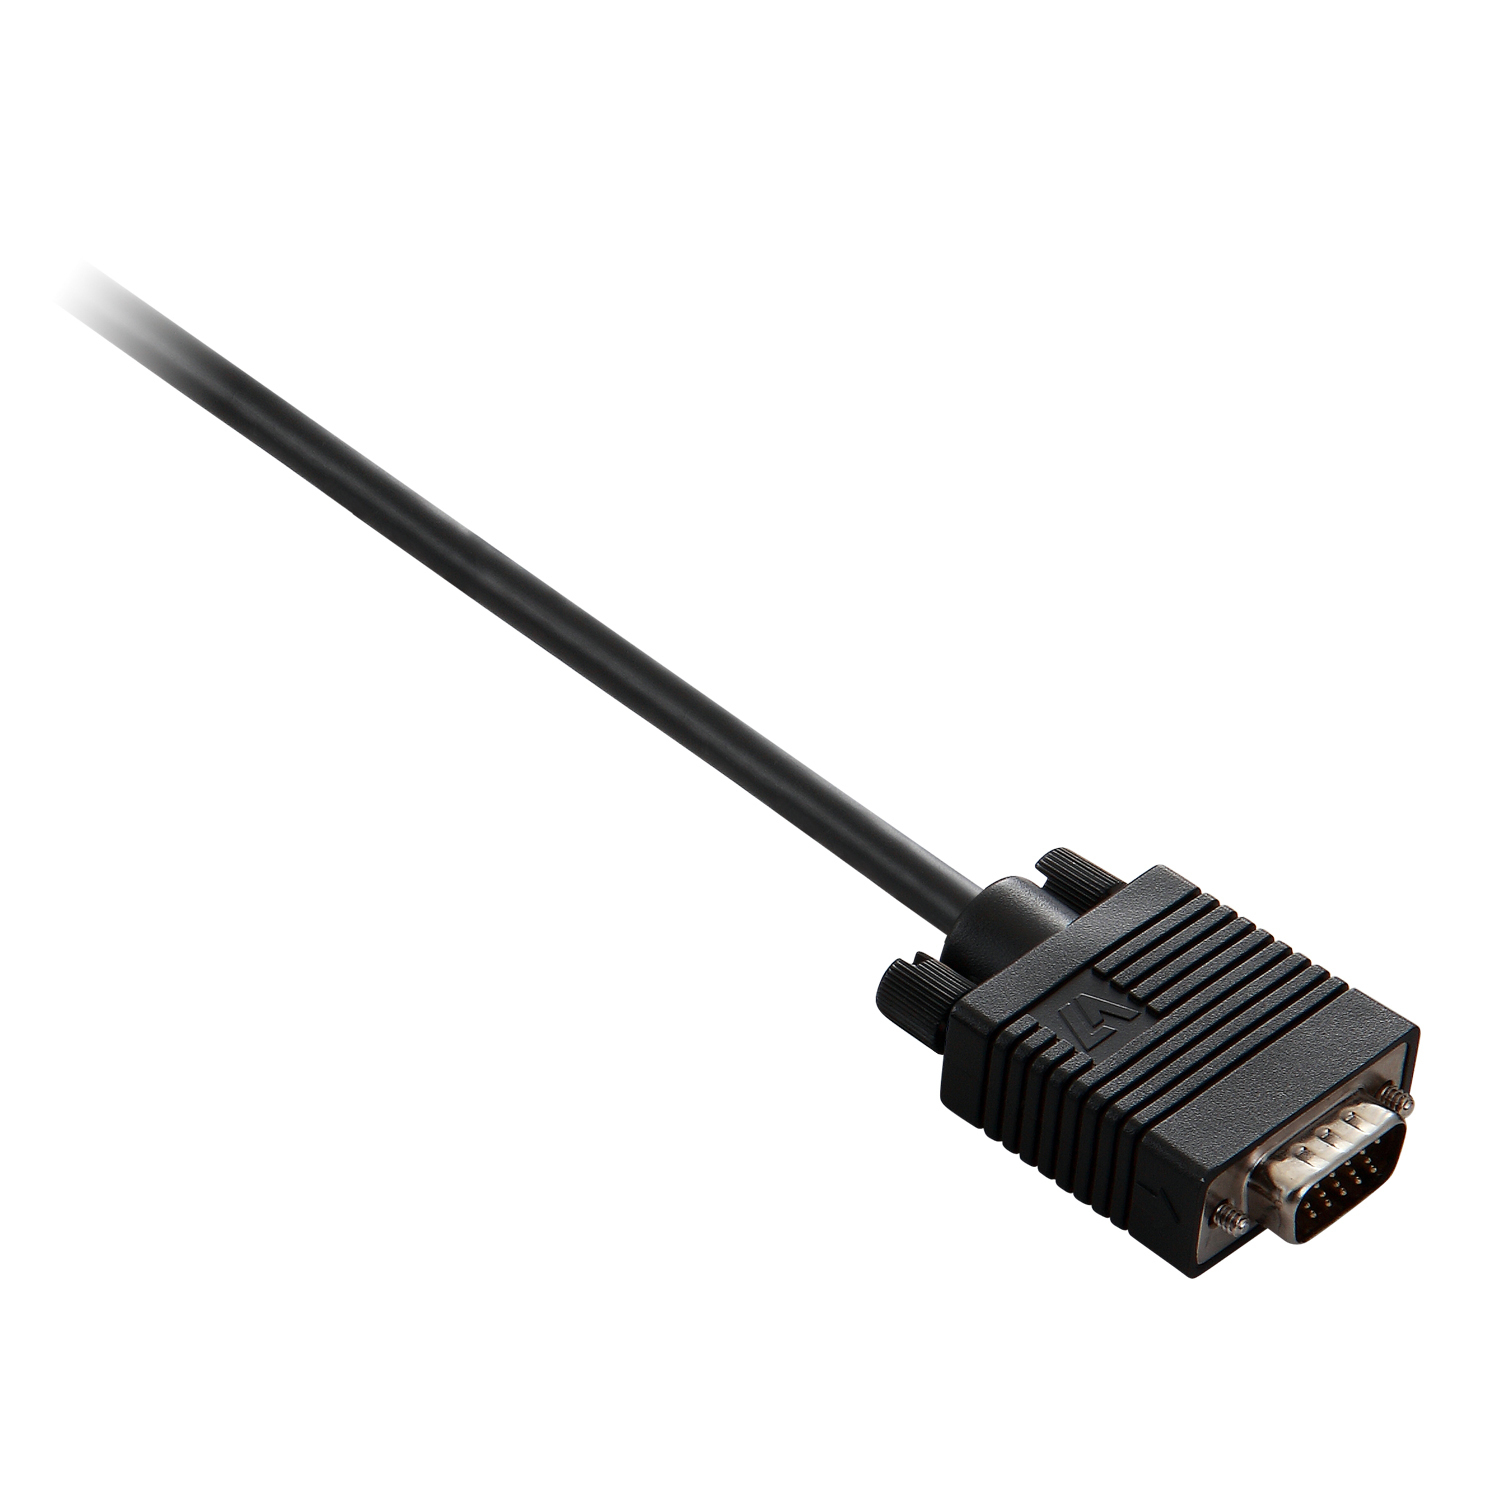 Photos - Cable (video, audio, USB) V7 Black Video Cable VGA Male to VGA Male 3m 10ft V7E2VGA-03M-BLK 